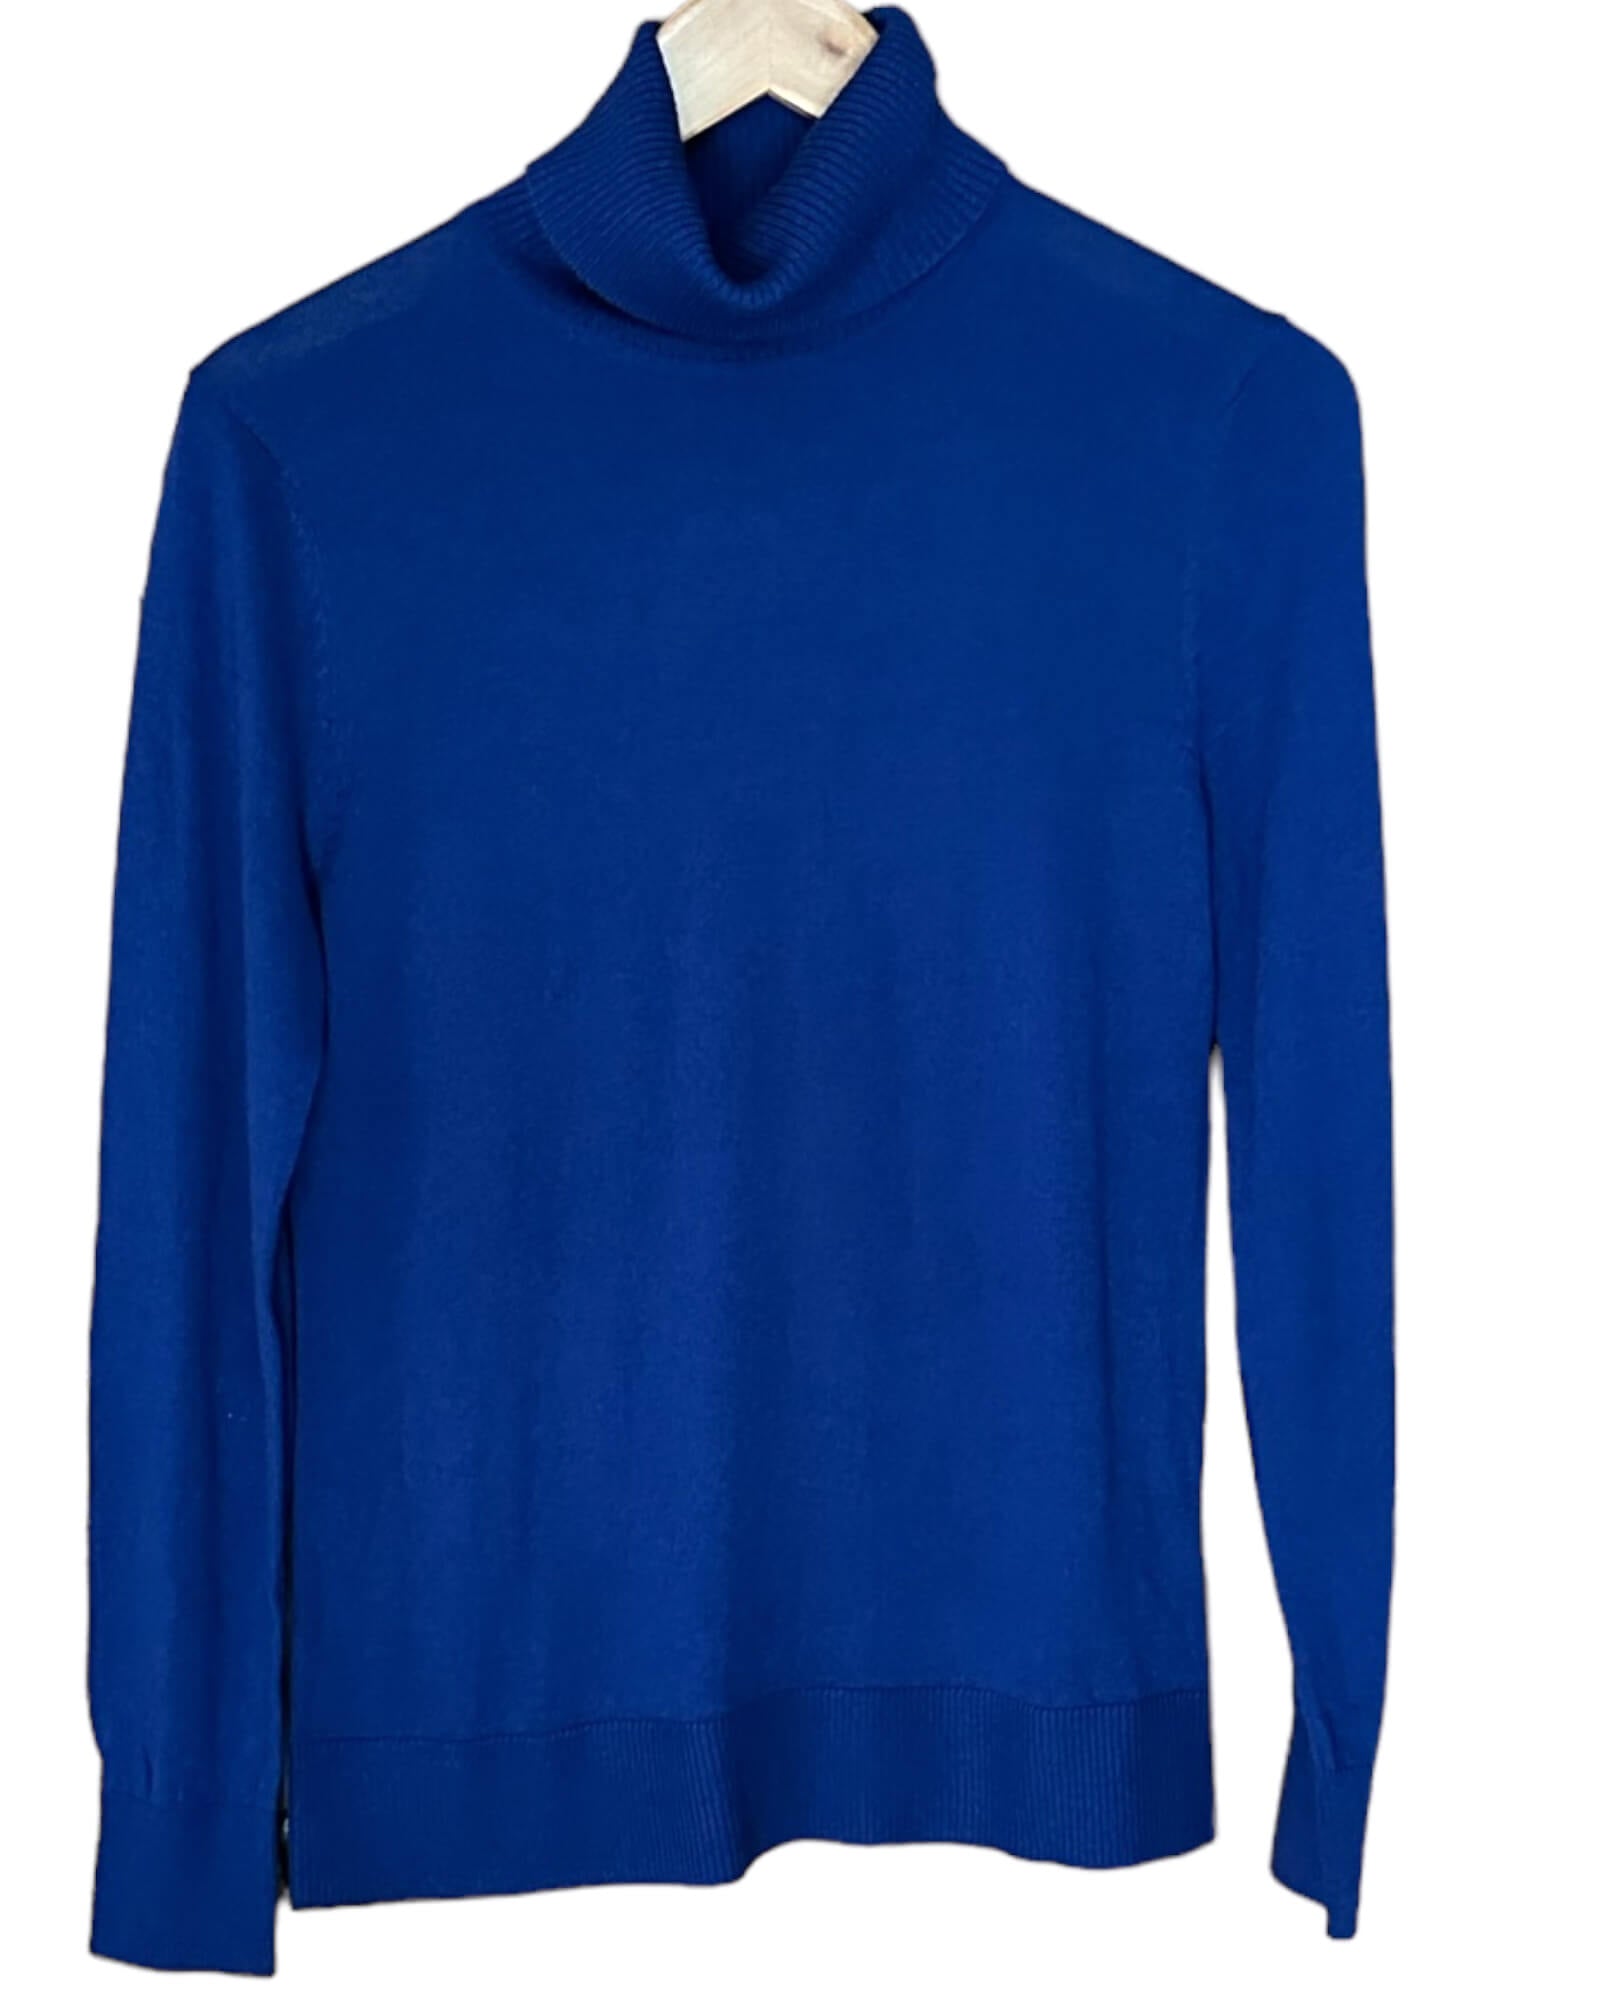 Cool Winter JEANNE PIERRE ribbed indigo blue turtleneck sweater